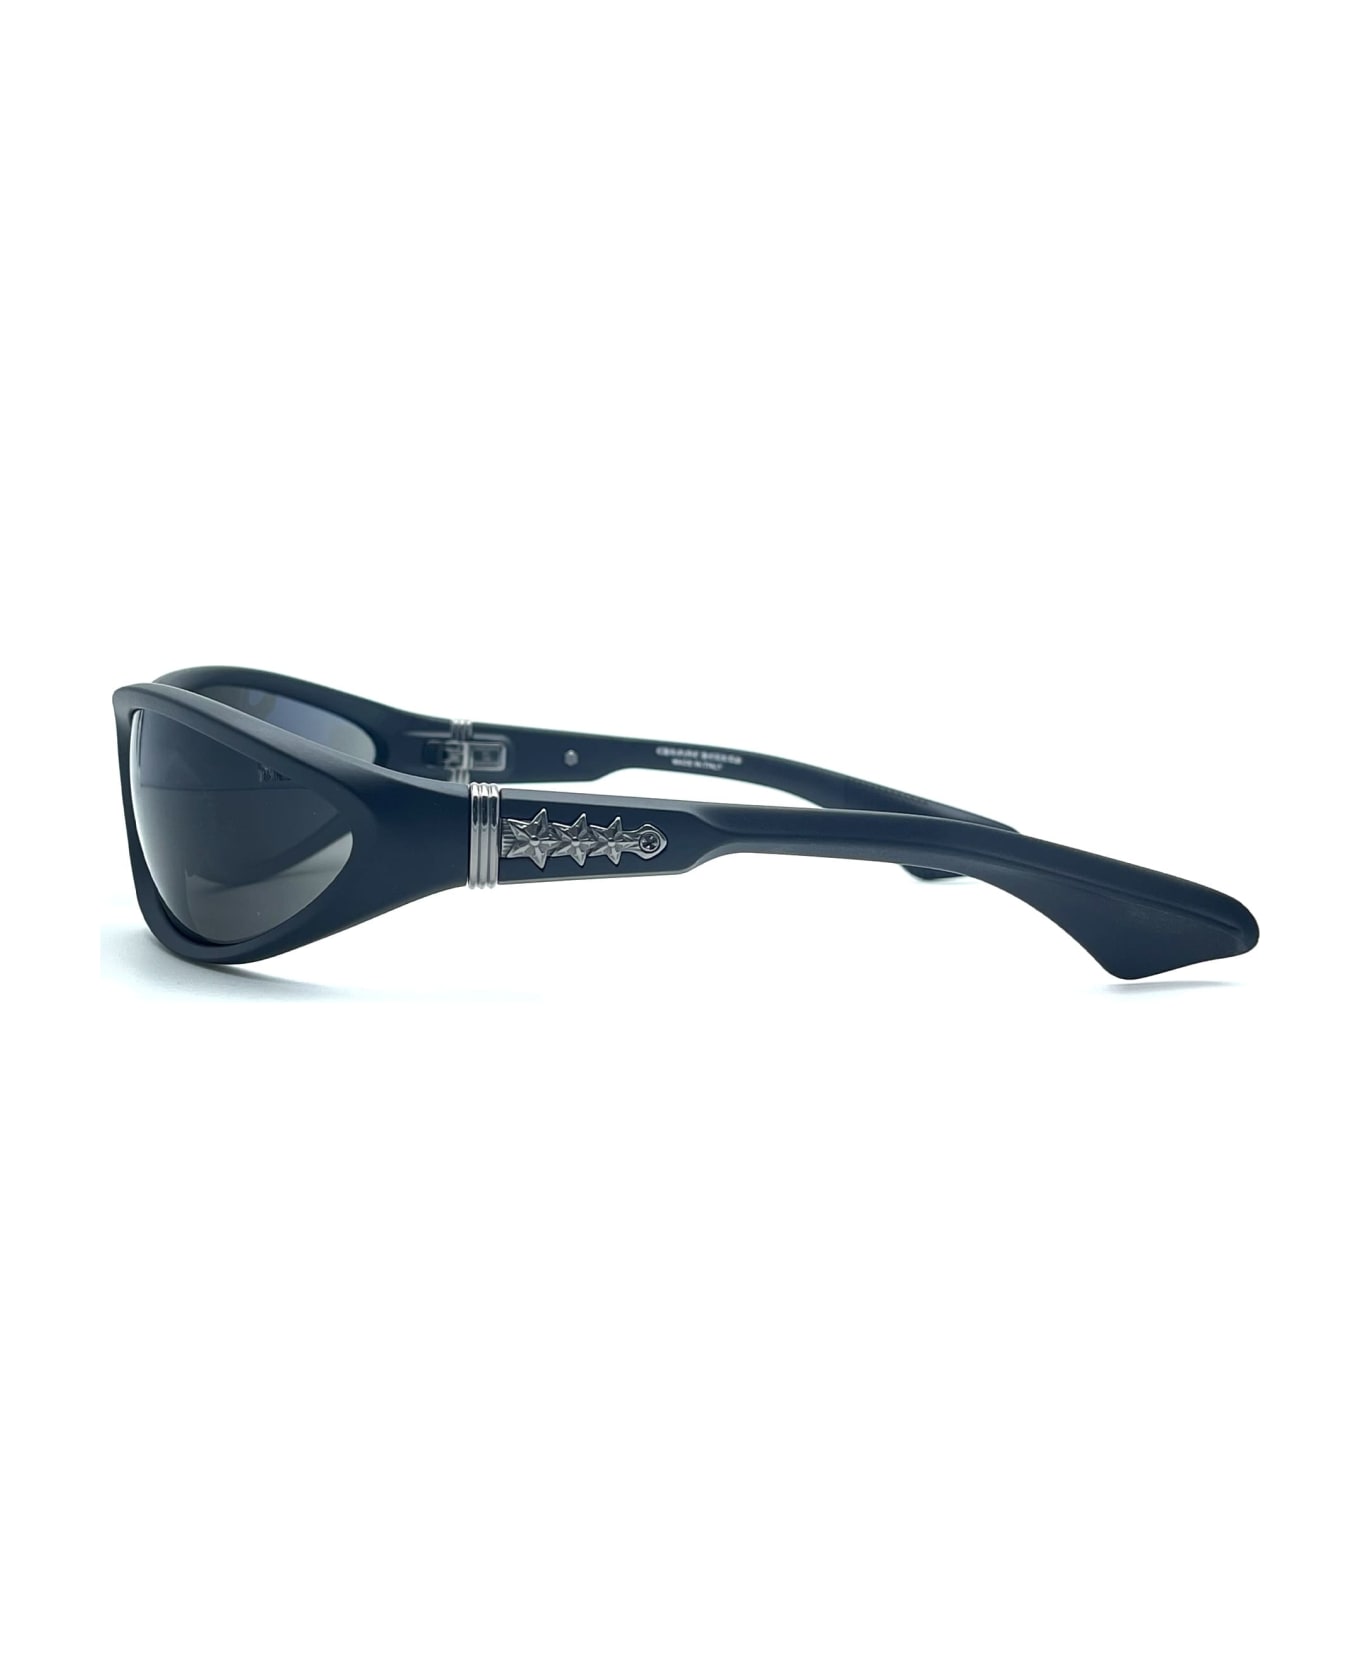 Chrome Hearts Spreader - Matte Black Sunglasses - black matte サングラス